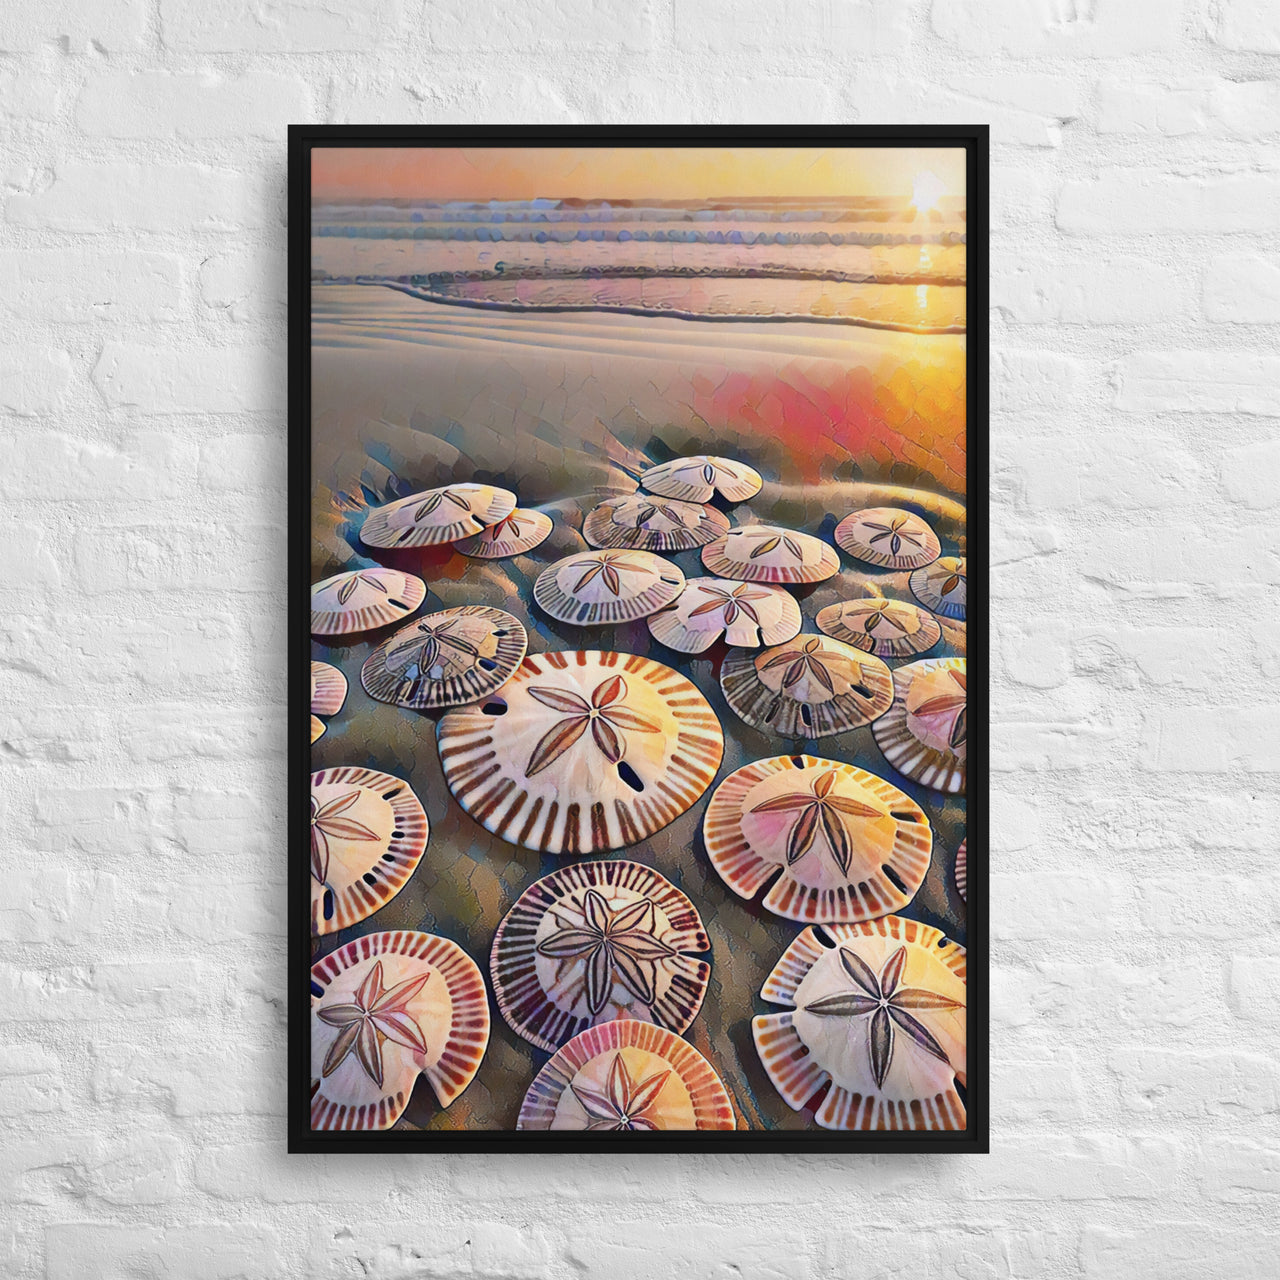 Oregon Sand Dollars - Digital Art -Framed canvas - FREE SHIPPING